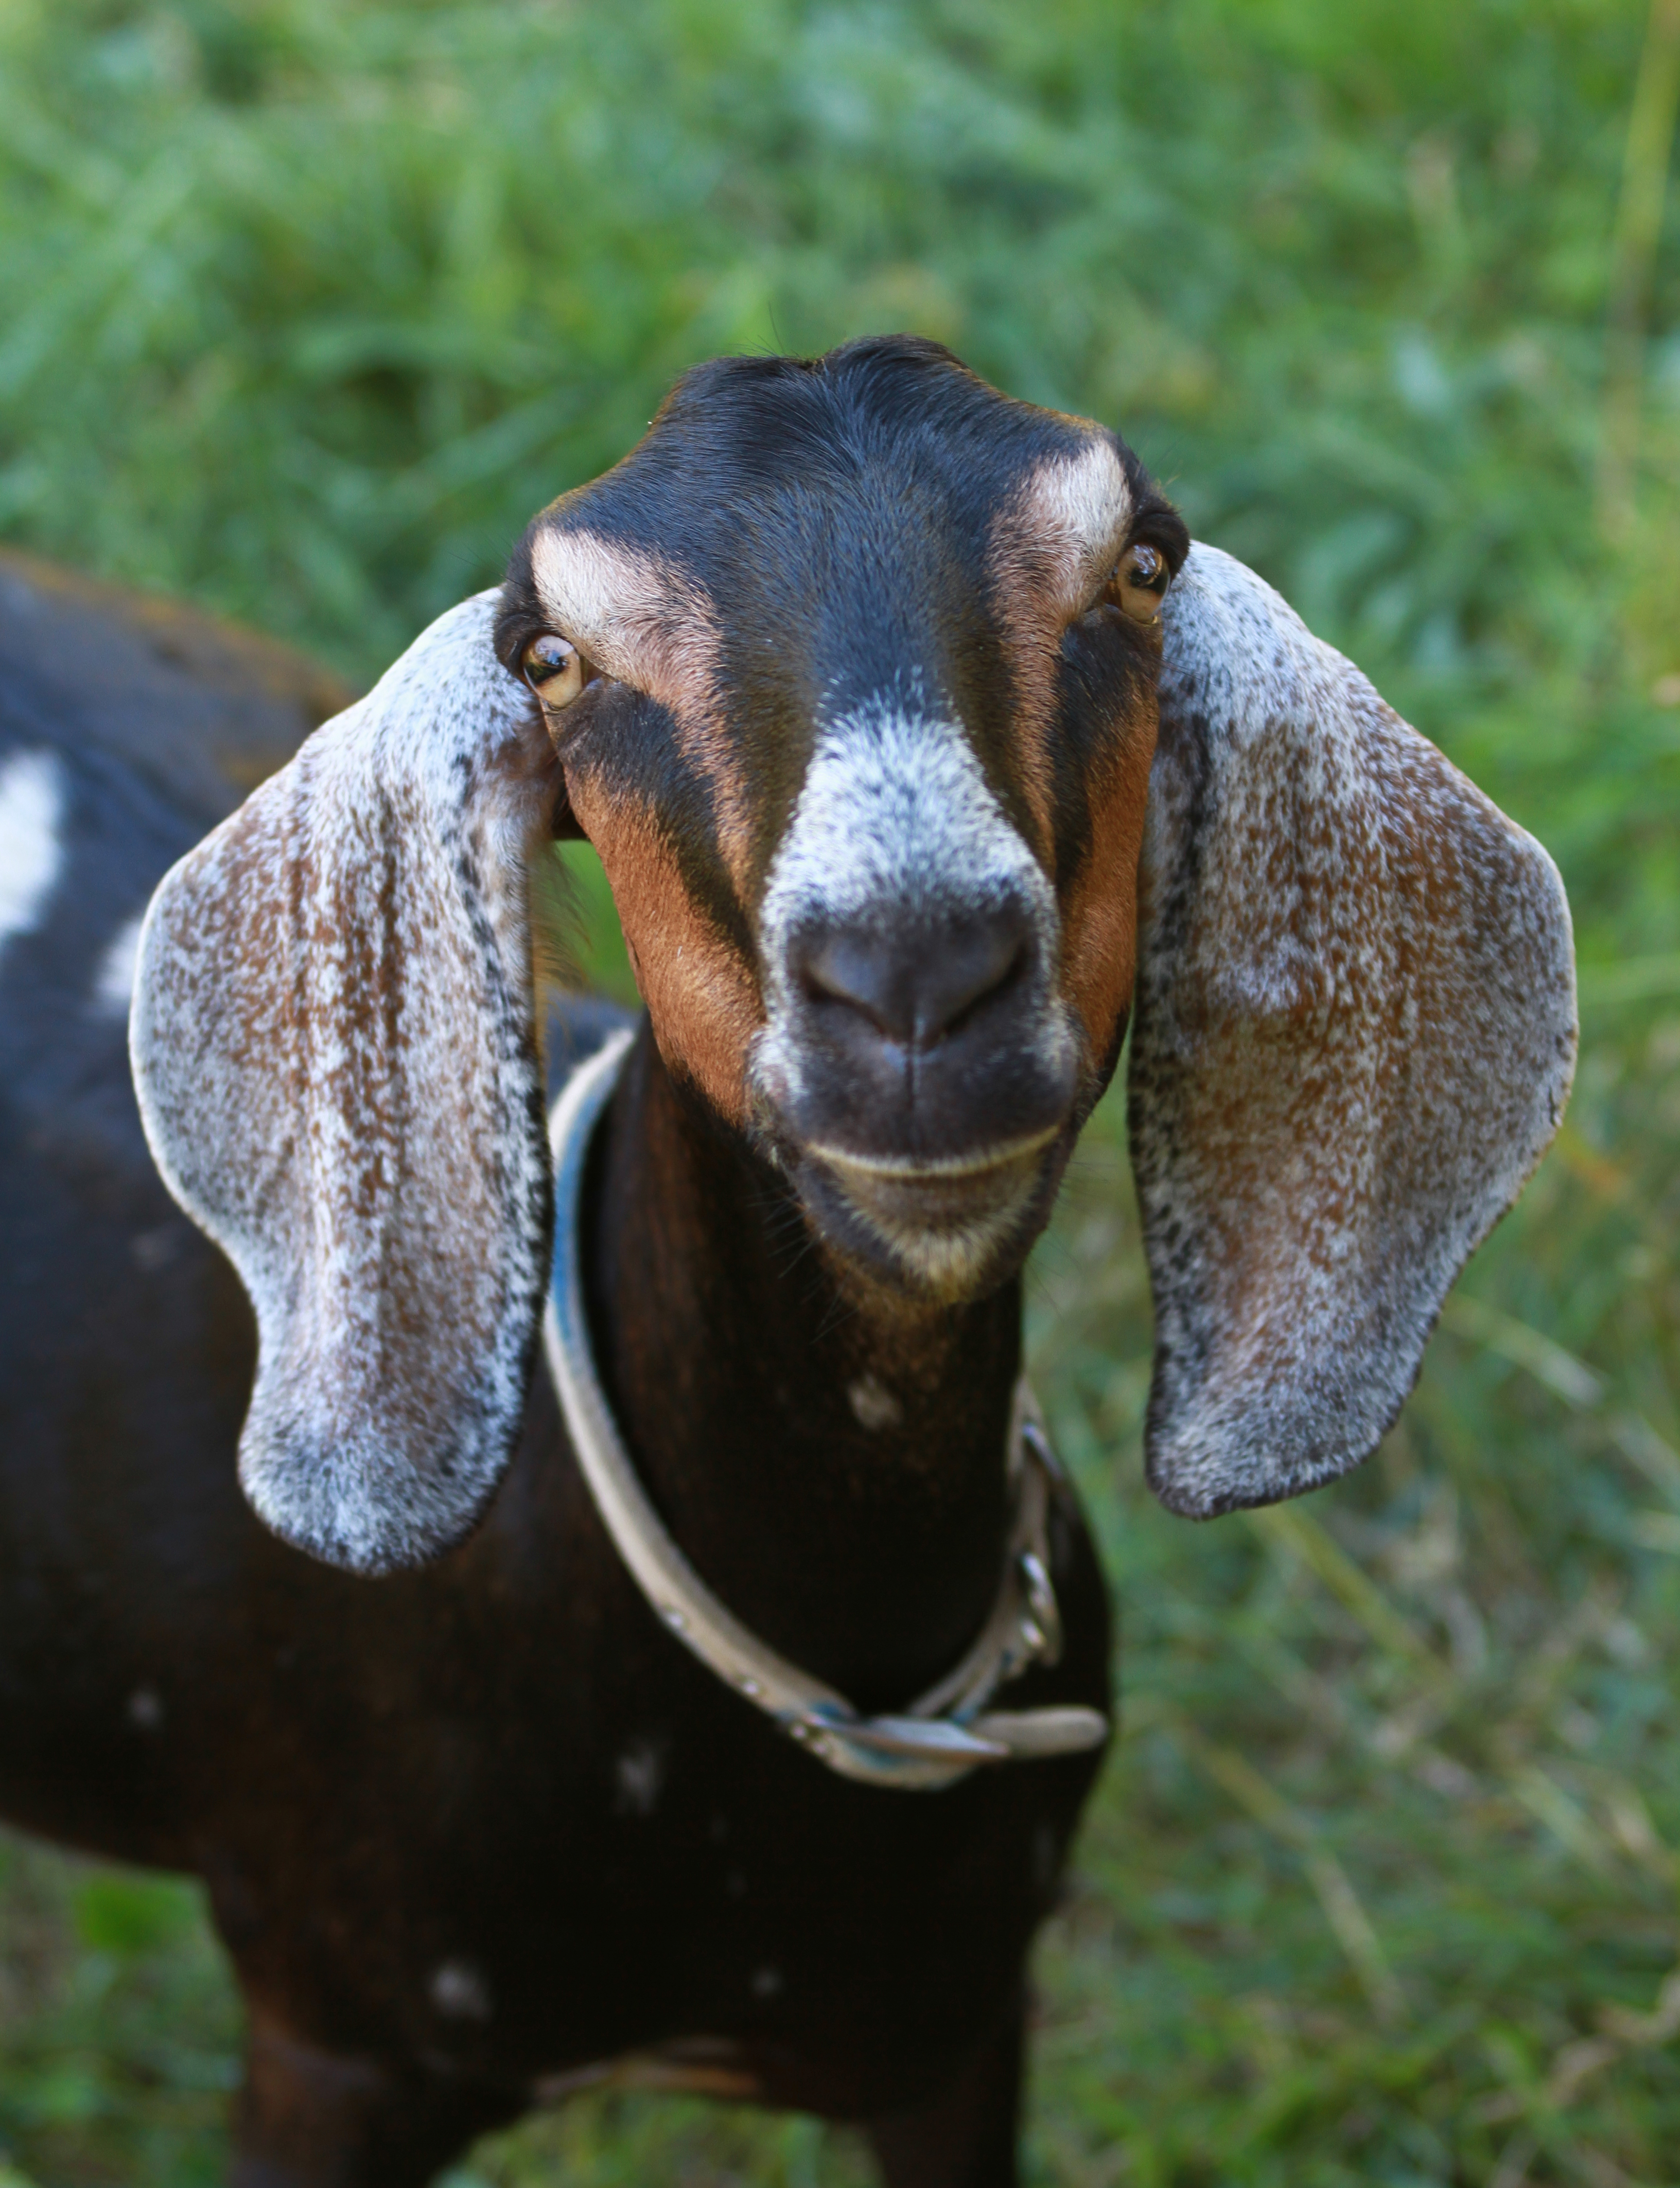 Female goat in grassy field